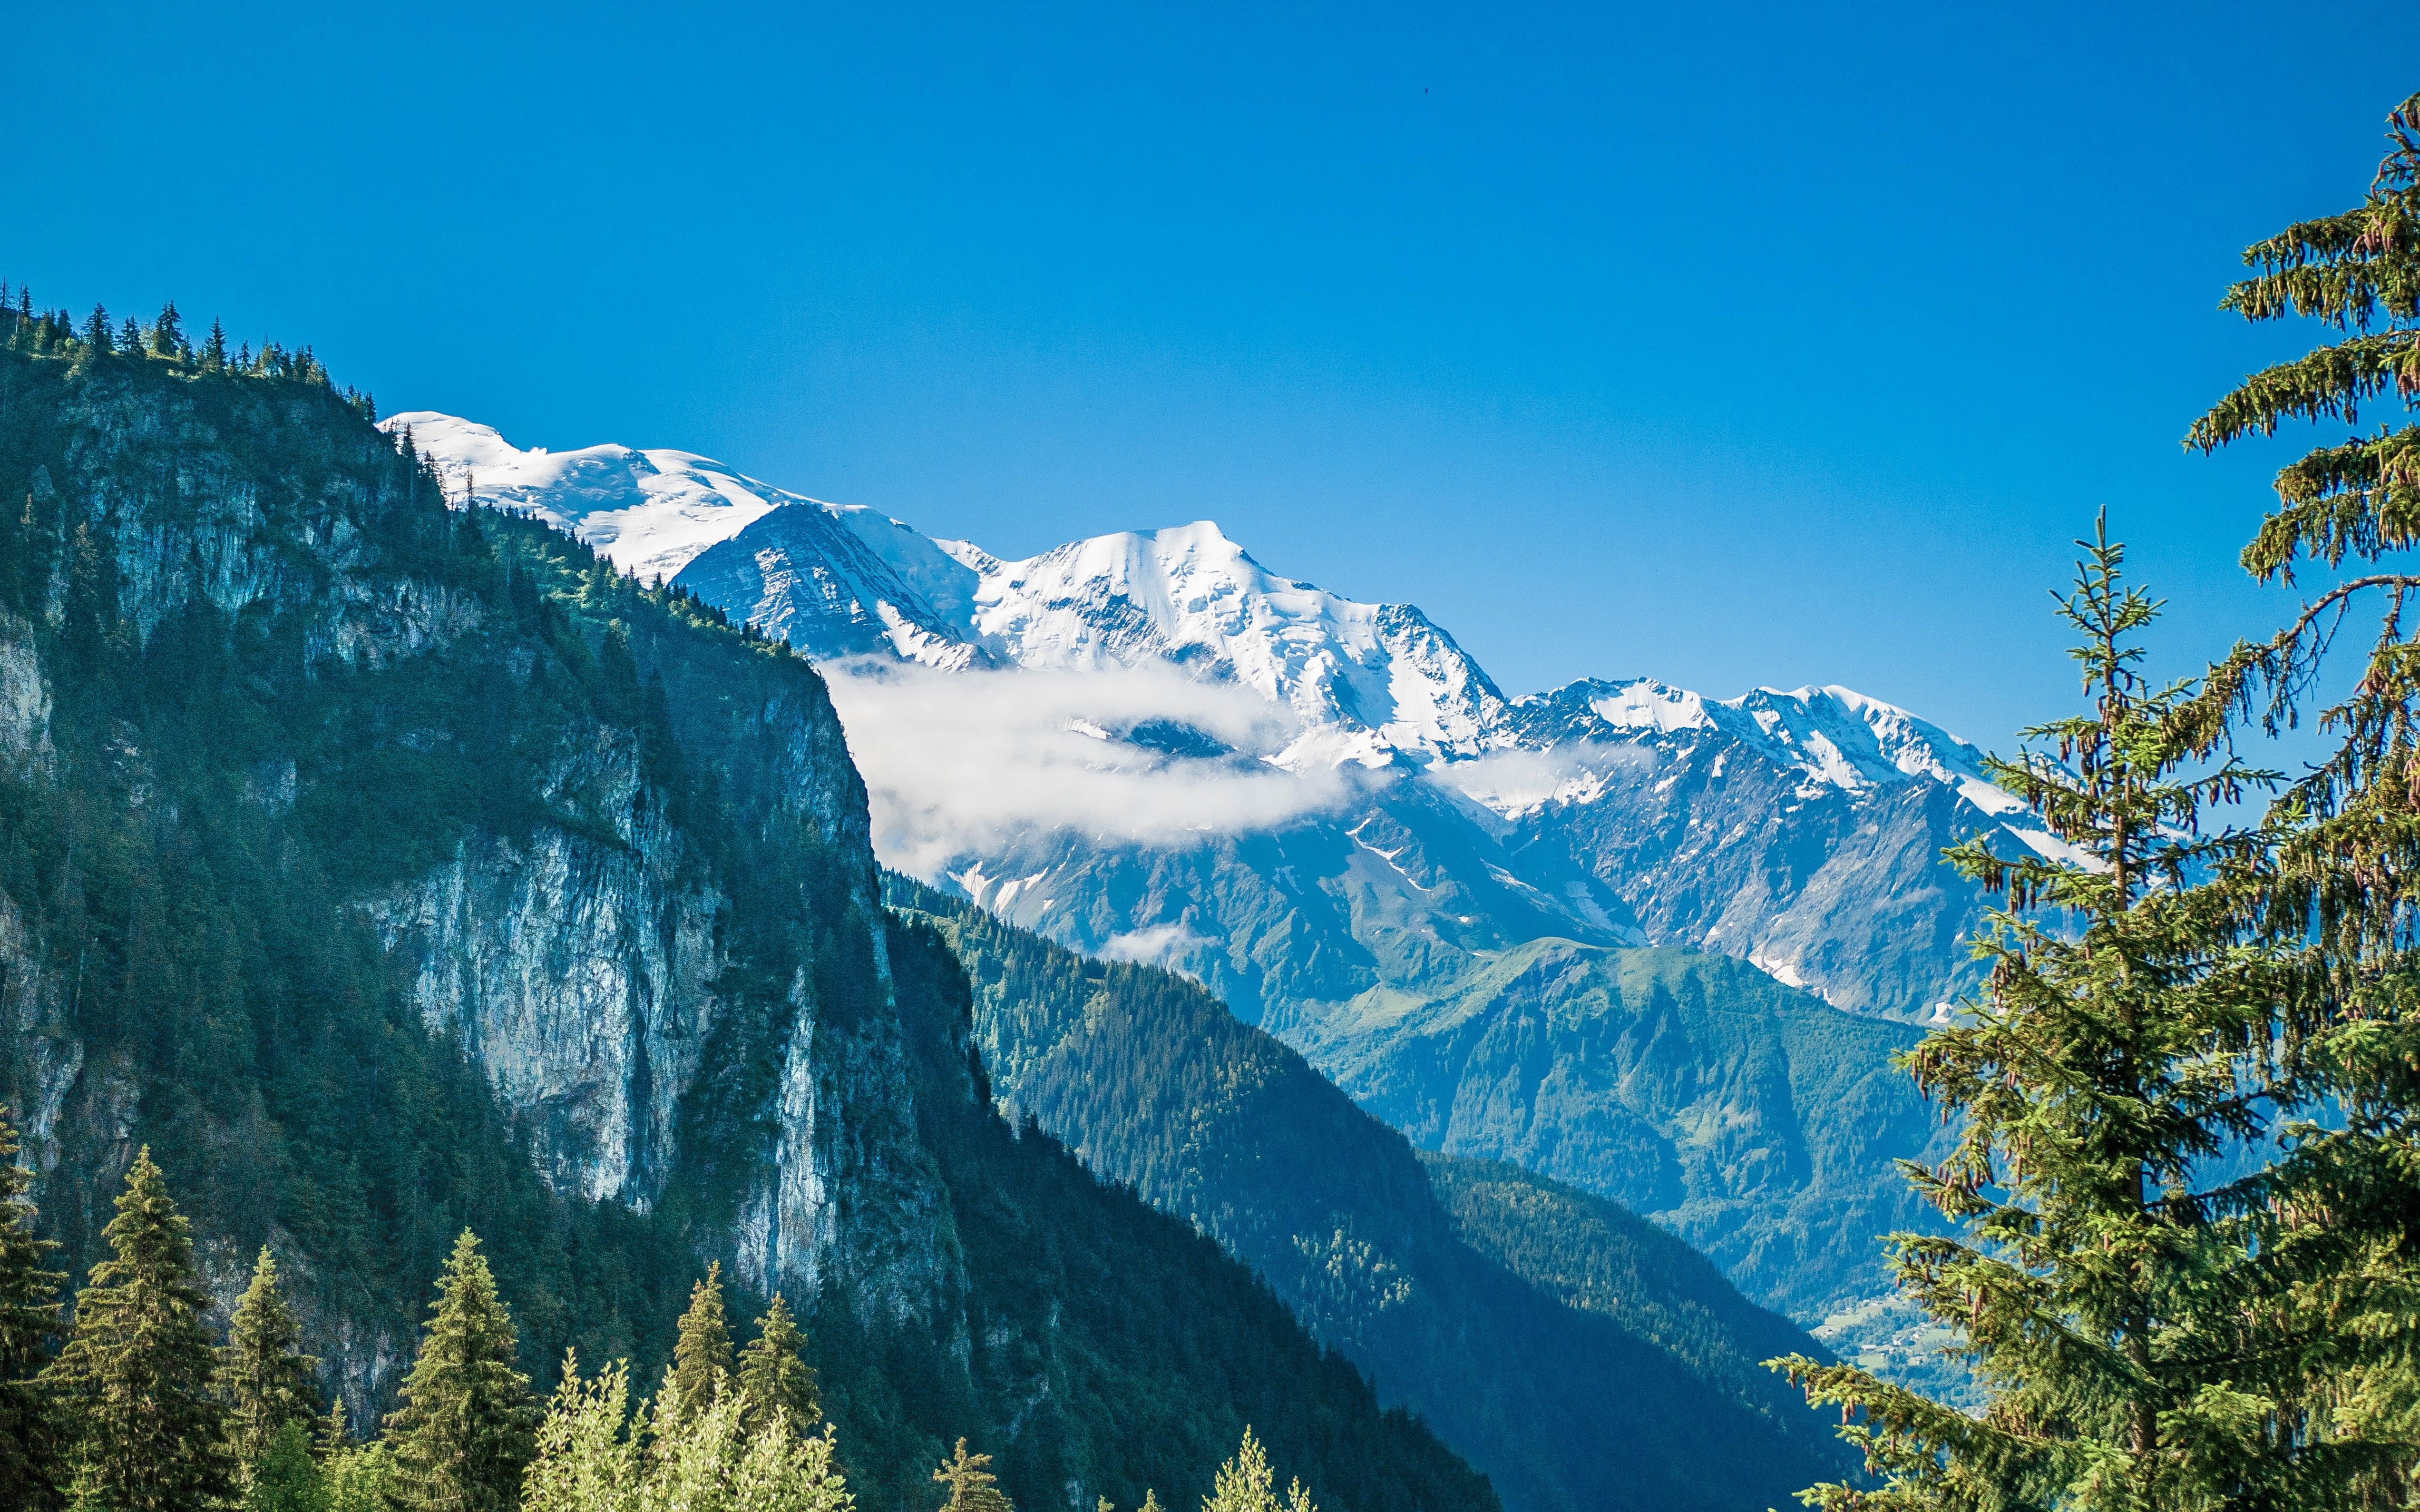 Mont Blanc in the Haute Savoie region of France